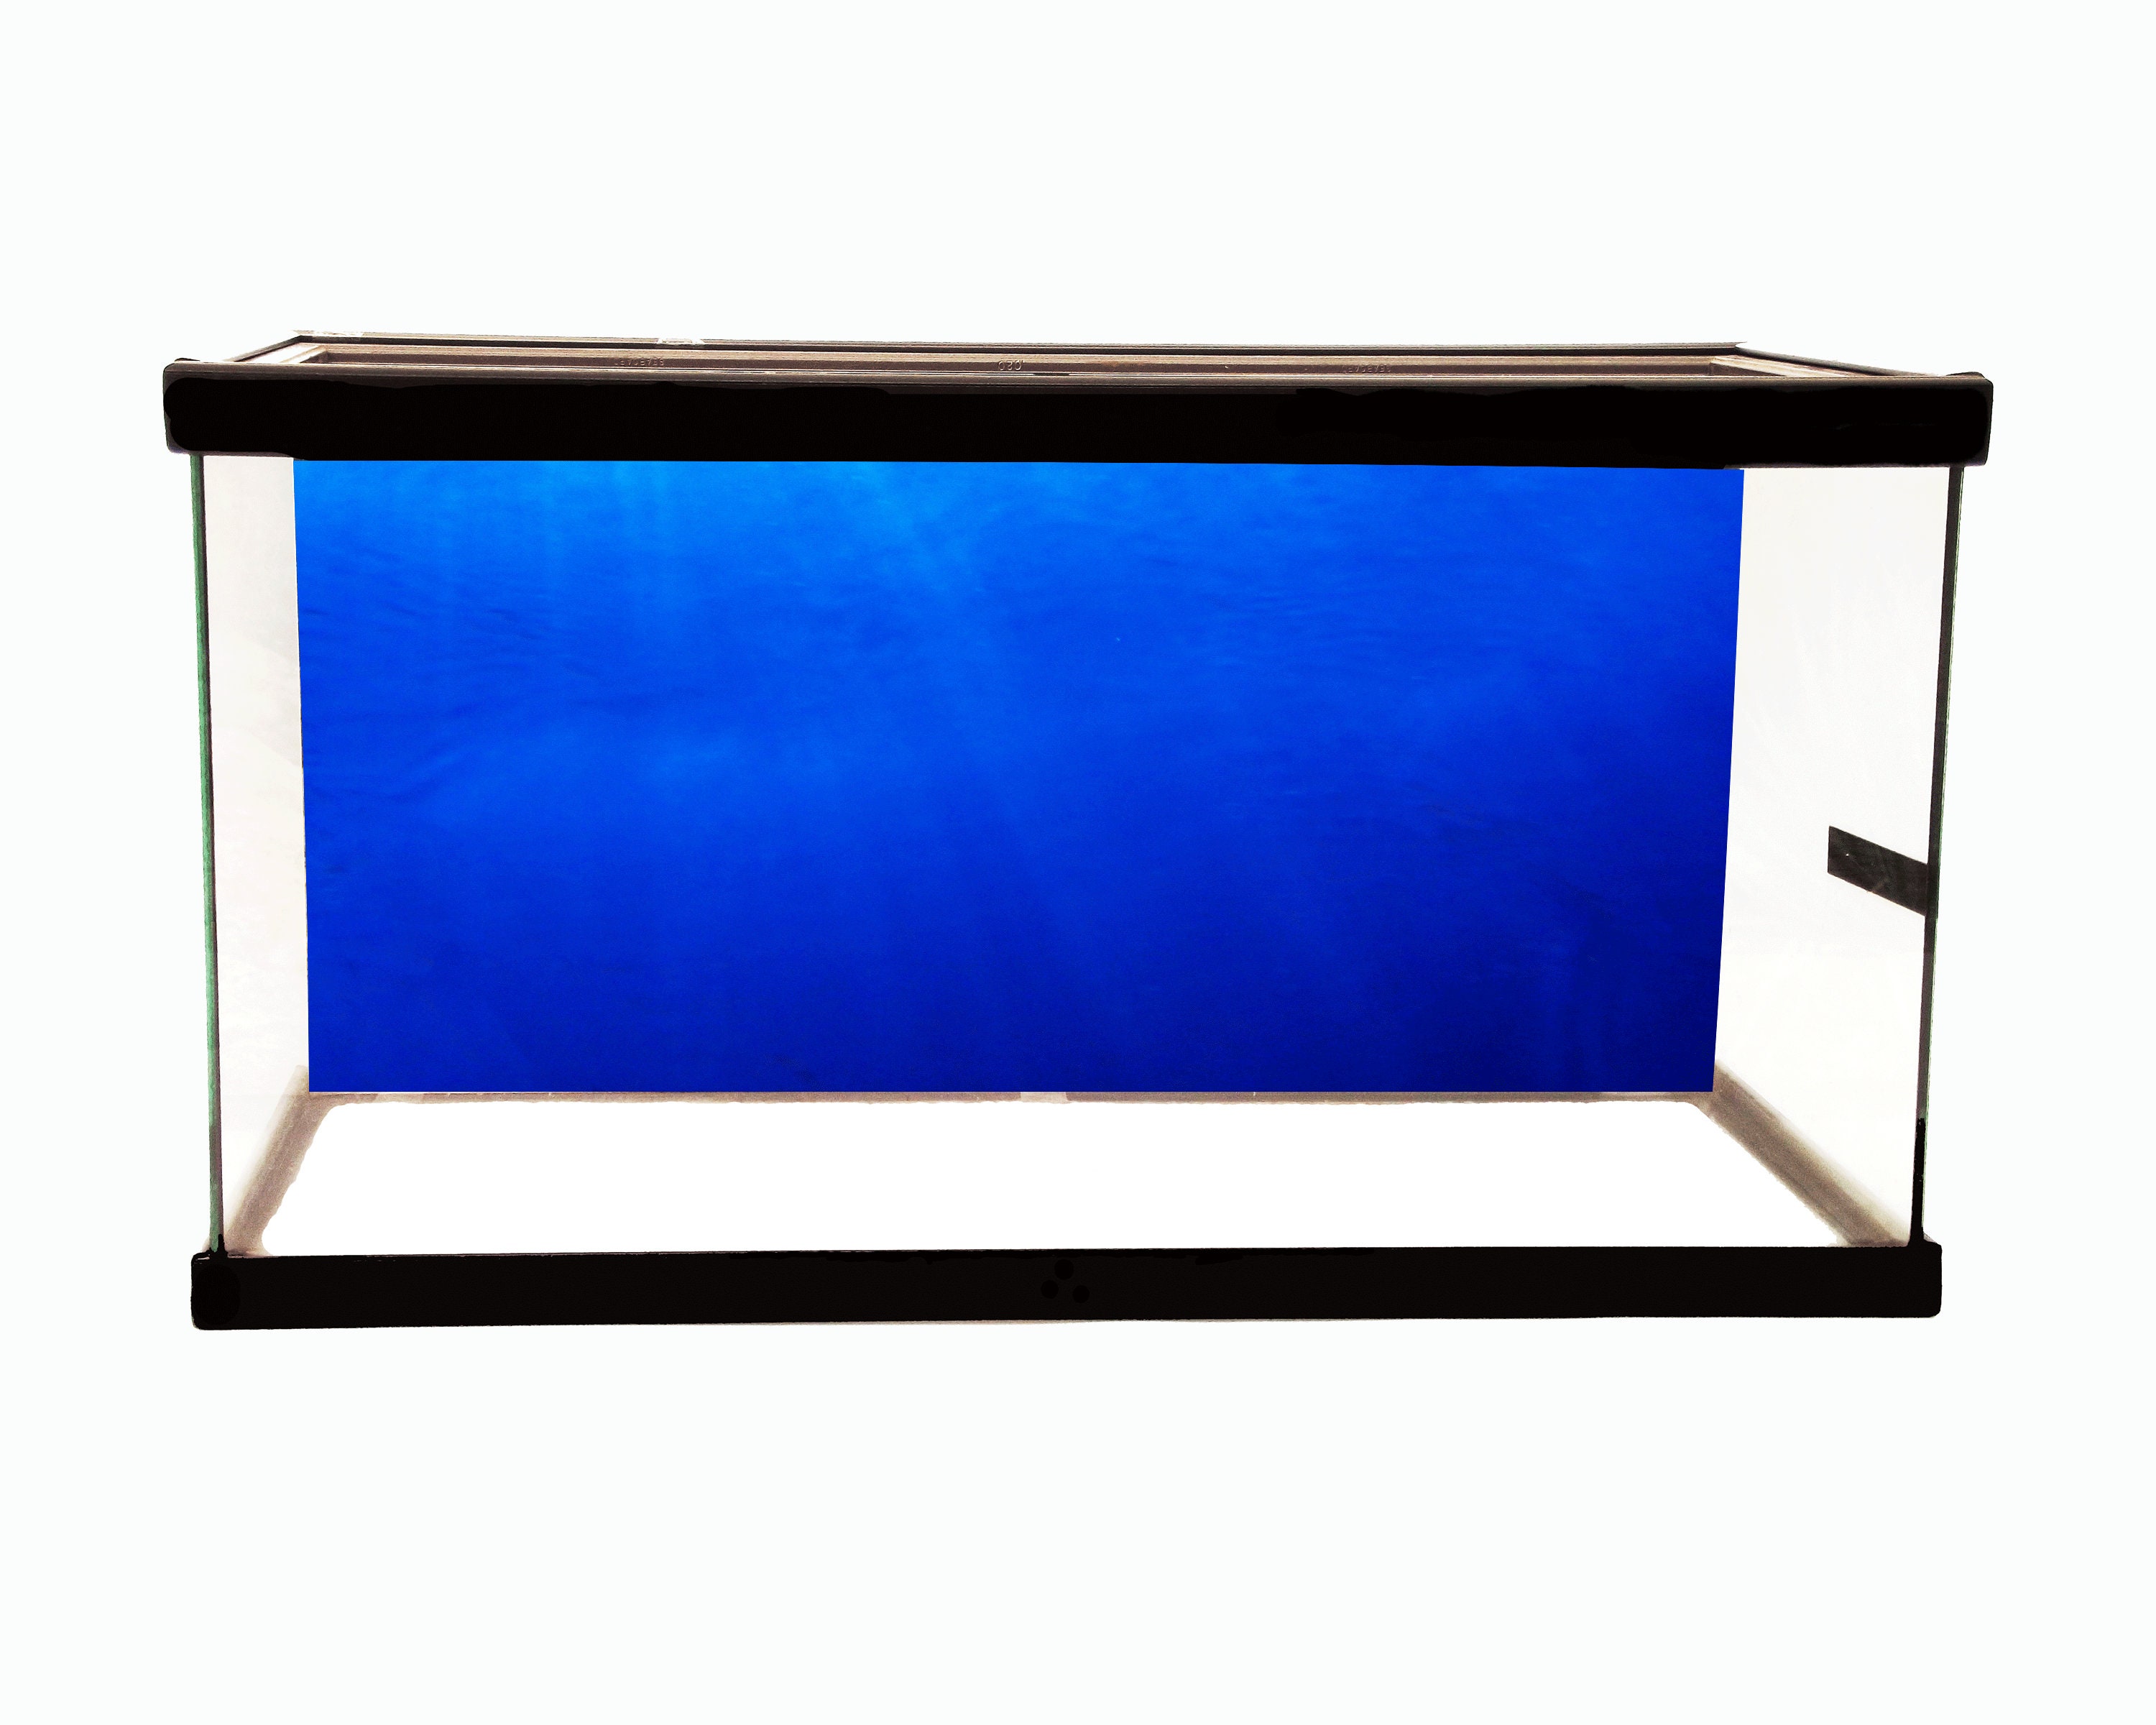 30 Gallon Black Aquarium Background Petbackdrops - Reusable Aquarium  Background